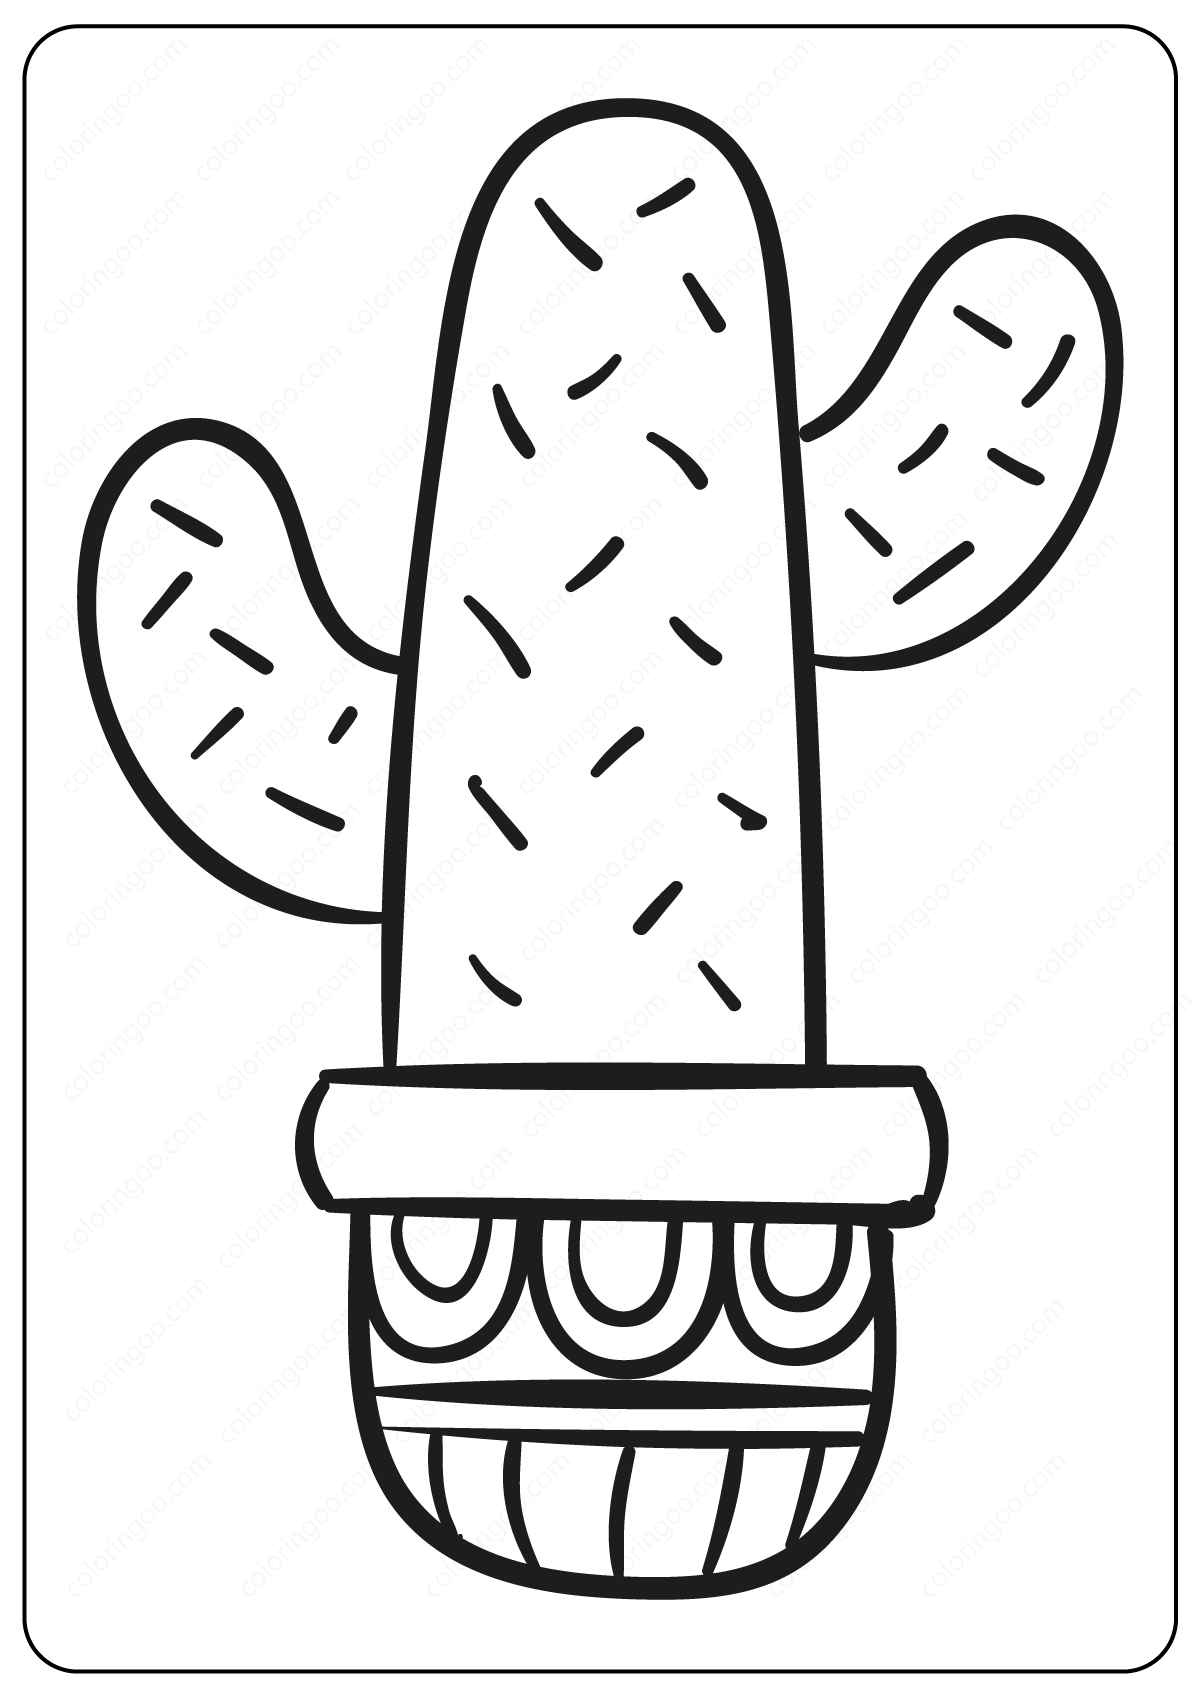 Cute Cactus Coloring Pages hahahaimblogging